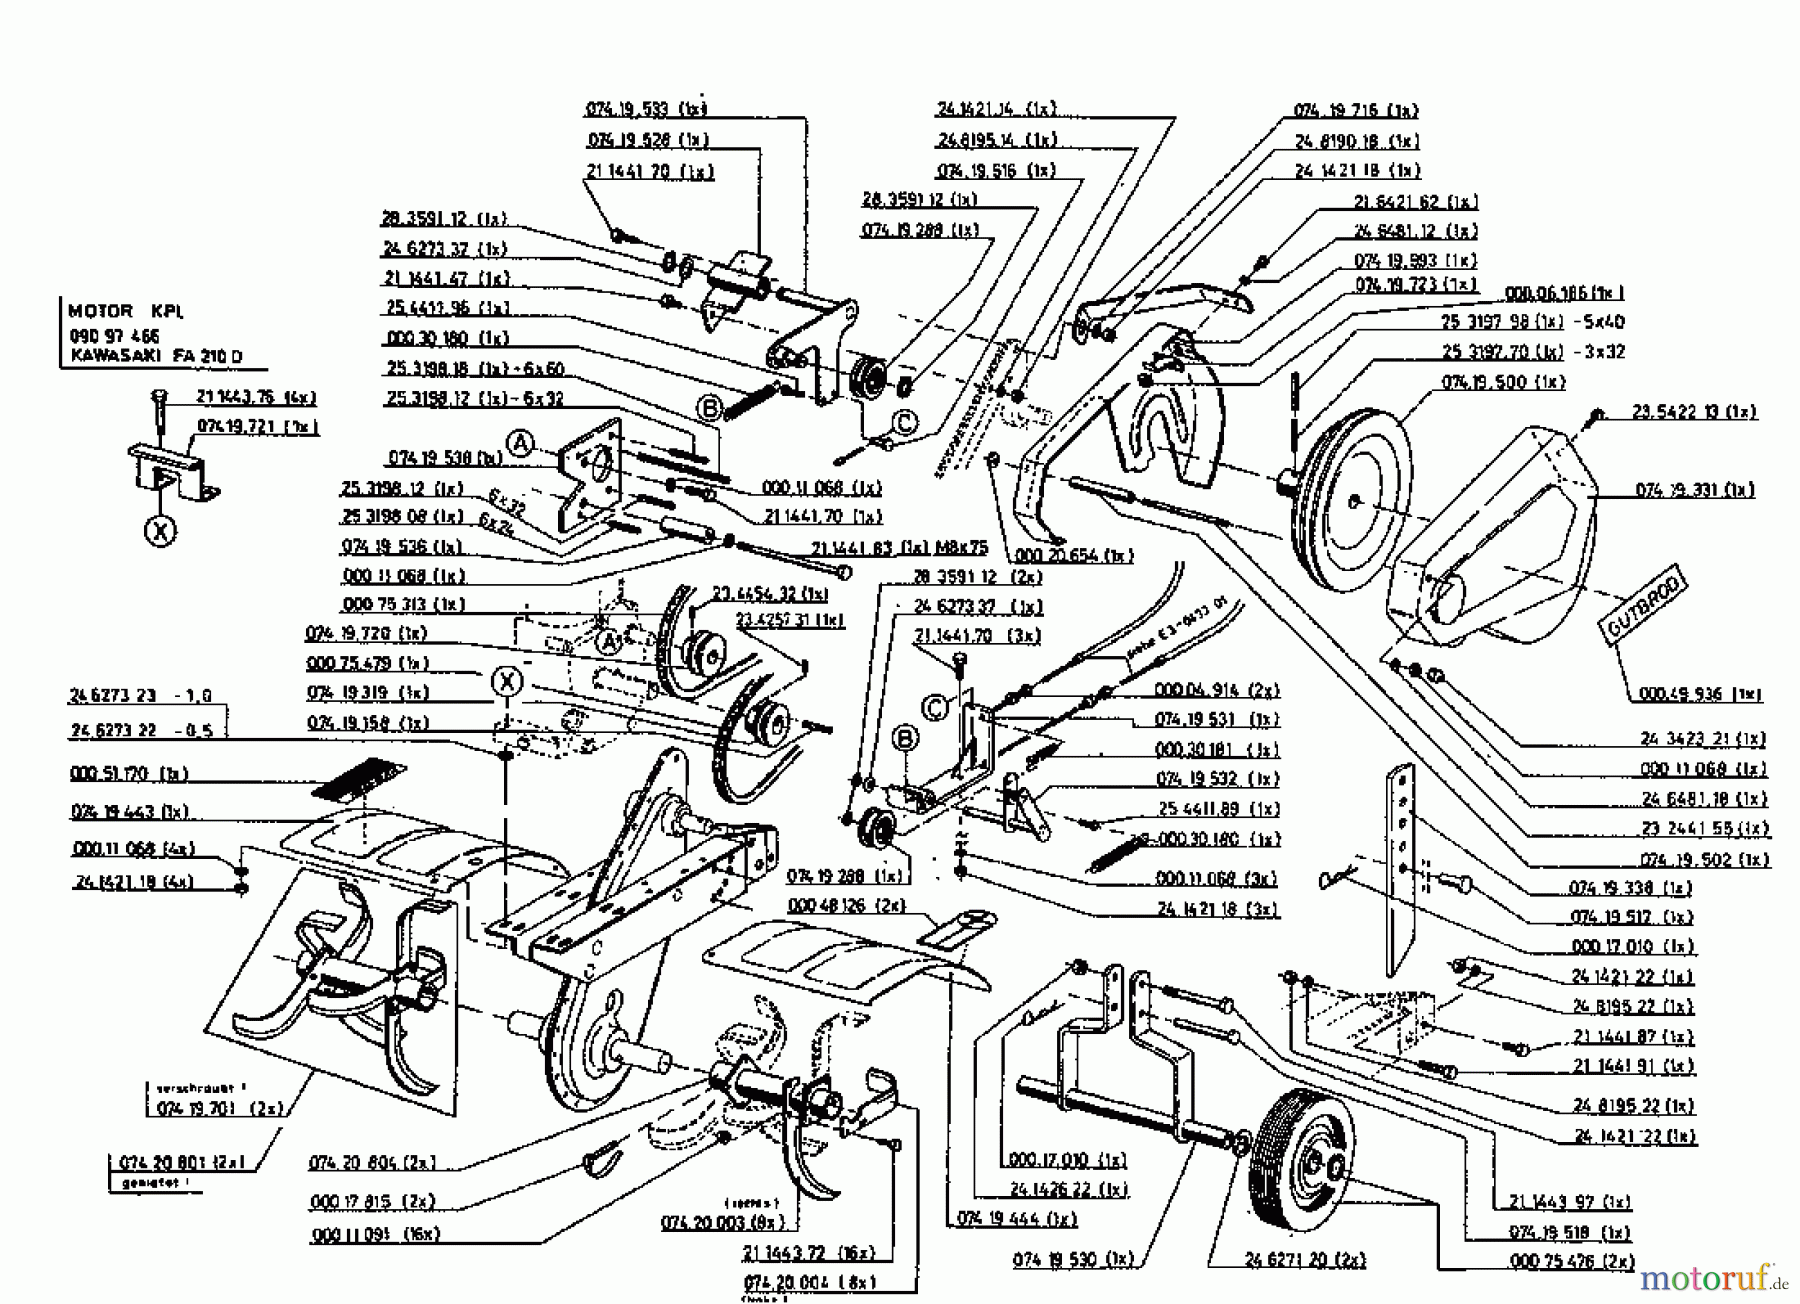  Gutbrod Motorhacken MB 62-52 K 07518.03  (1996) Grundgerät